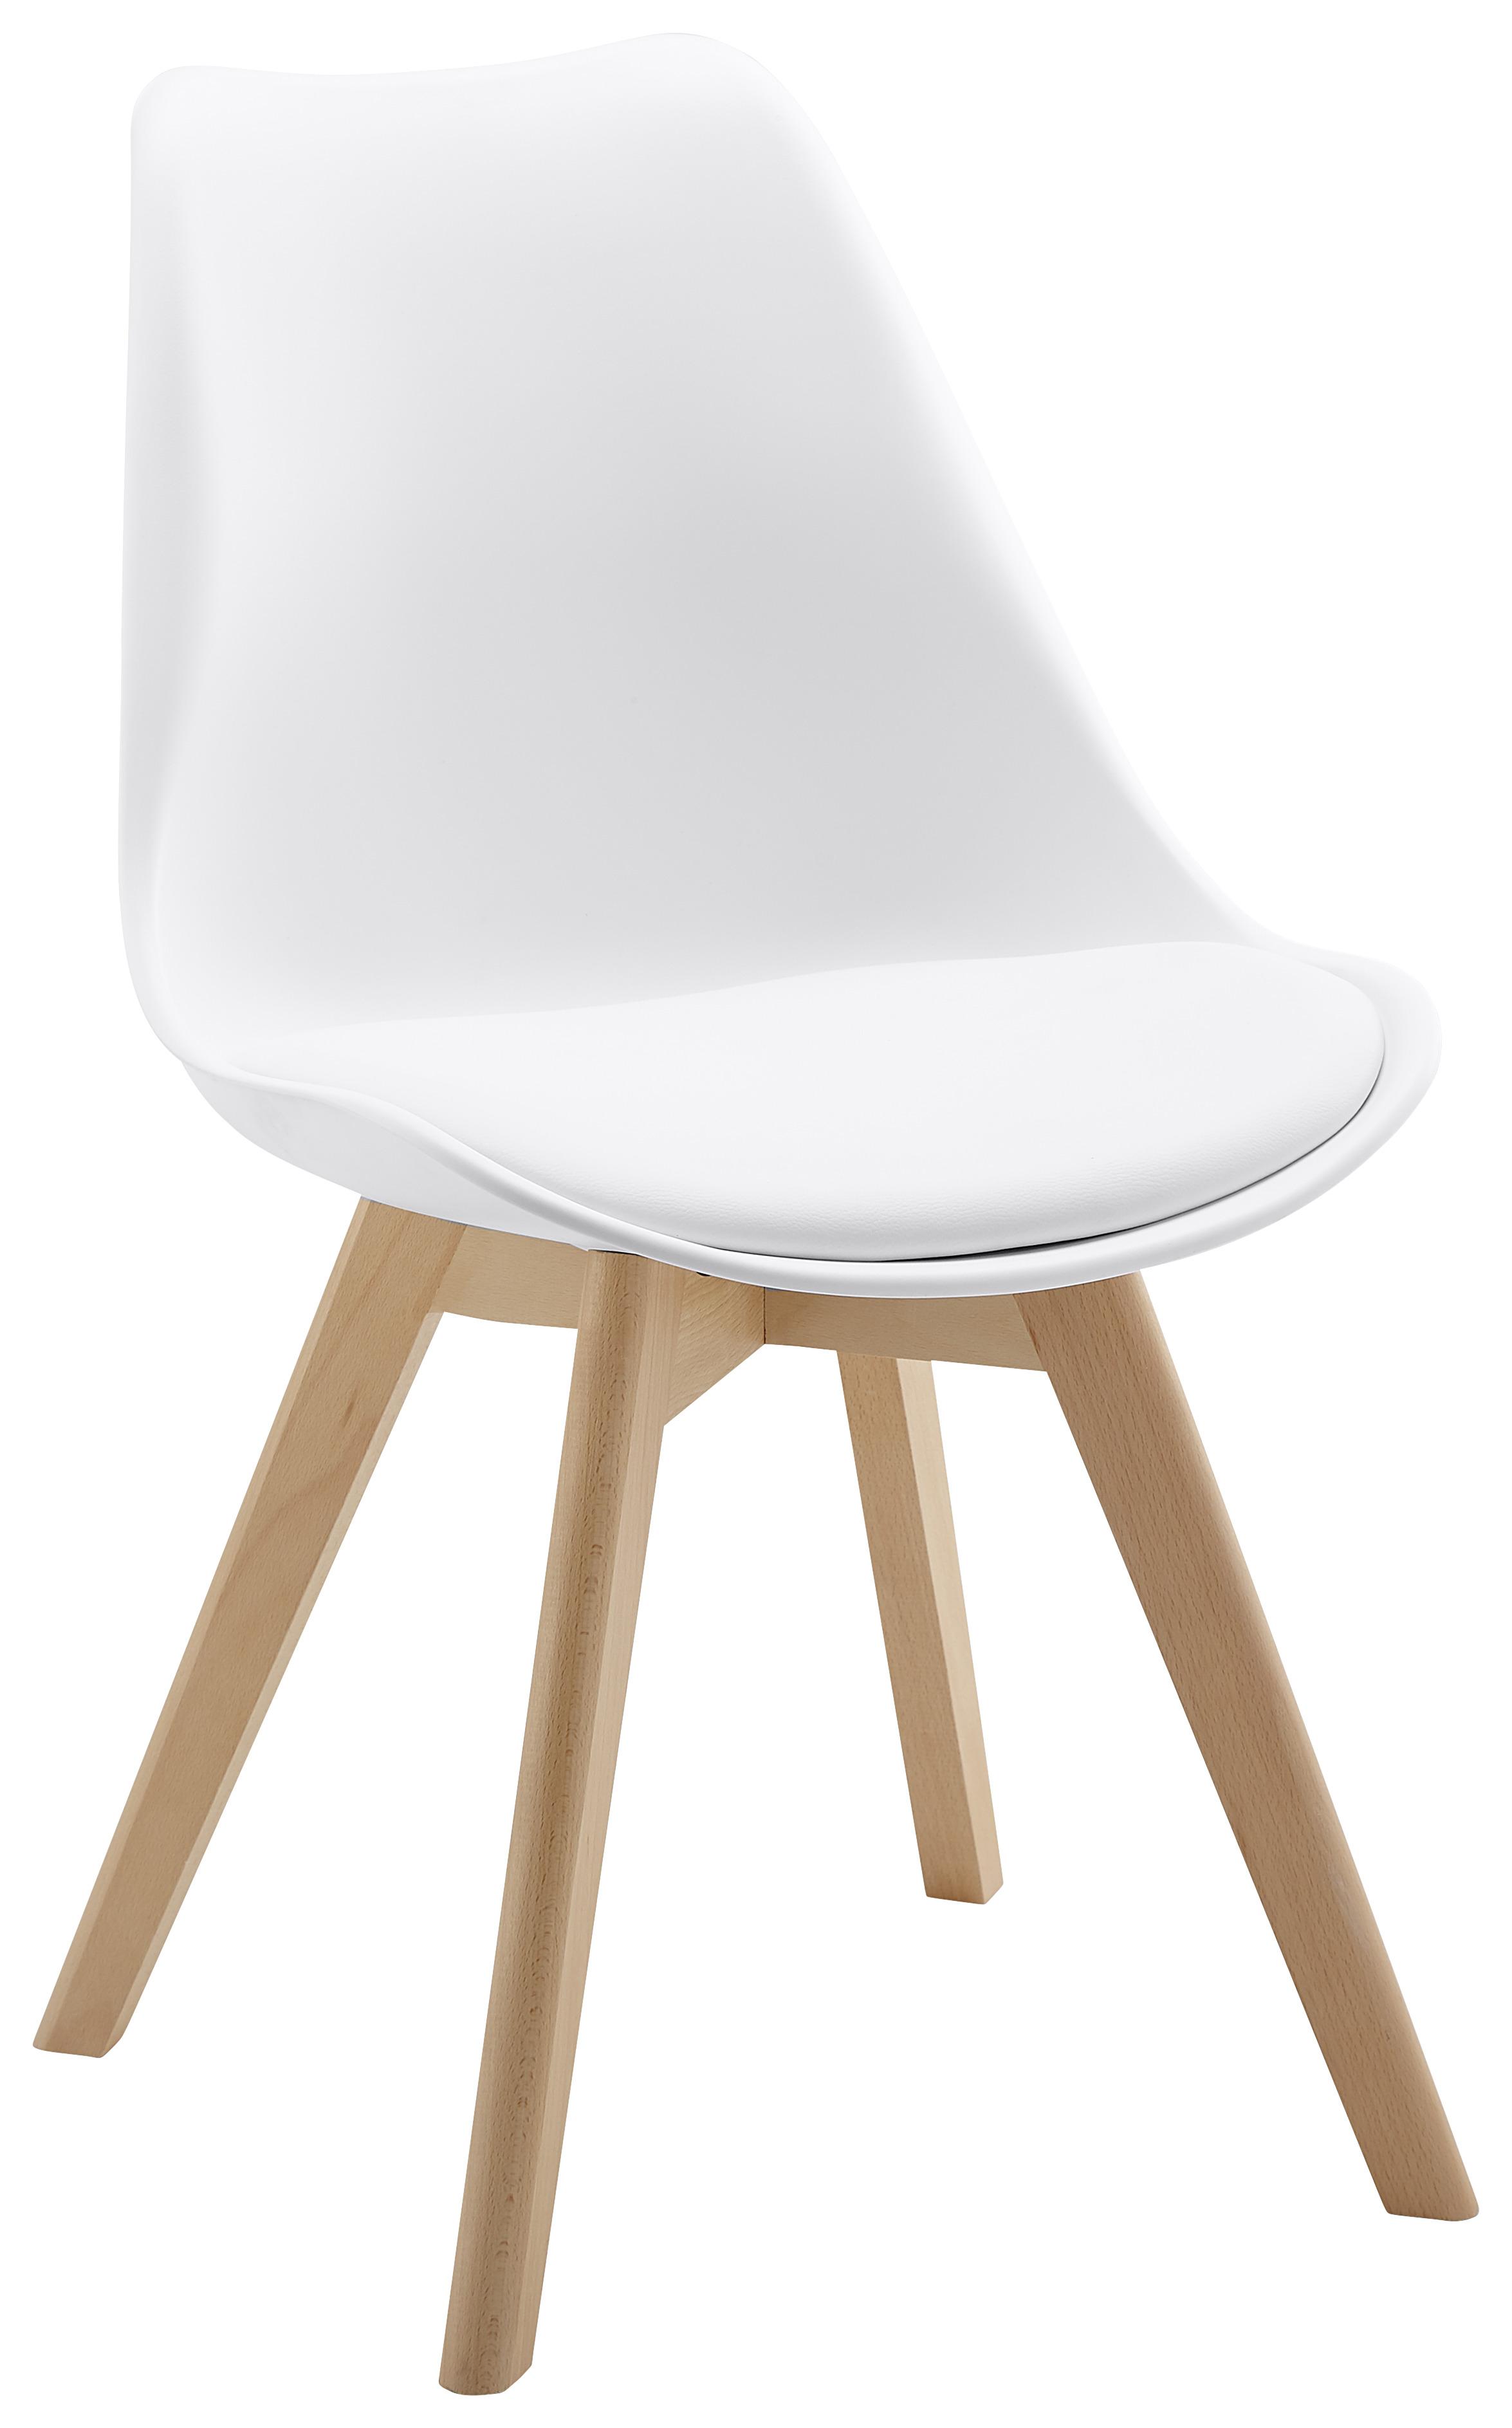 Stuhl "Judy", weiß - Buchefarben/Weiß, MODERN, Holz/Kunststoff (49/81/58cm) - Bessagi Home